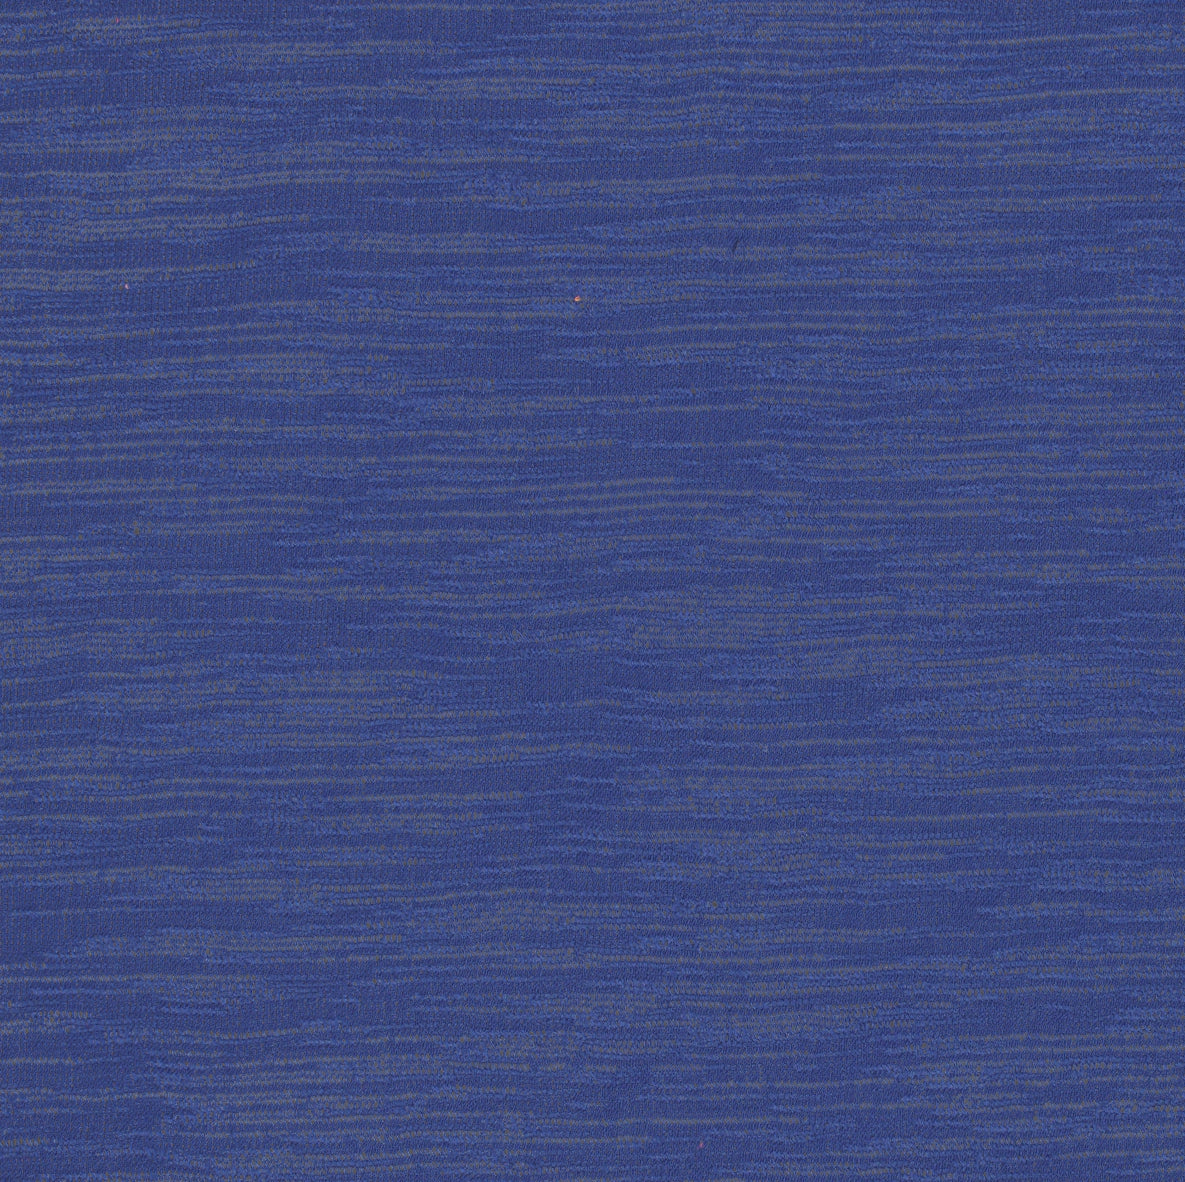 15011-08 Violet Blue Polyester Plain Dyed 100% 58&quot; 95g/yd blue knit plain dyed polyester Solid Color - knit fabric - woven fabric - fabric company - fabric wholesale - fabric b2b - fabric factory - high quality fabric - hong kong fabric - fabric hk - acetate fabric - cotton fabric - linen fabric - metallic fabric - nylon fabric - polyester fabric - spandex fabric - chun wing hing - cwh hk - fabric worldwide ship - 針織布 - 梳織布 - 布料公司- 布料批發 - 香港布料 - 秦榮興